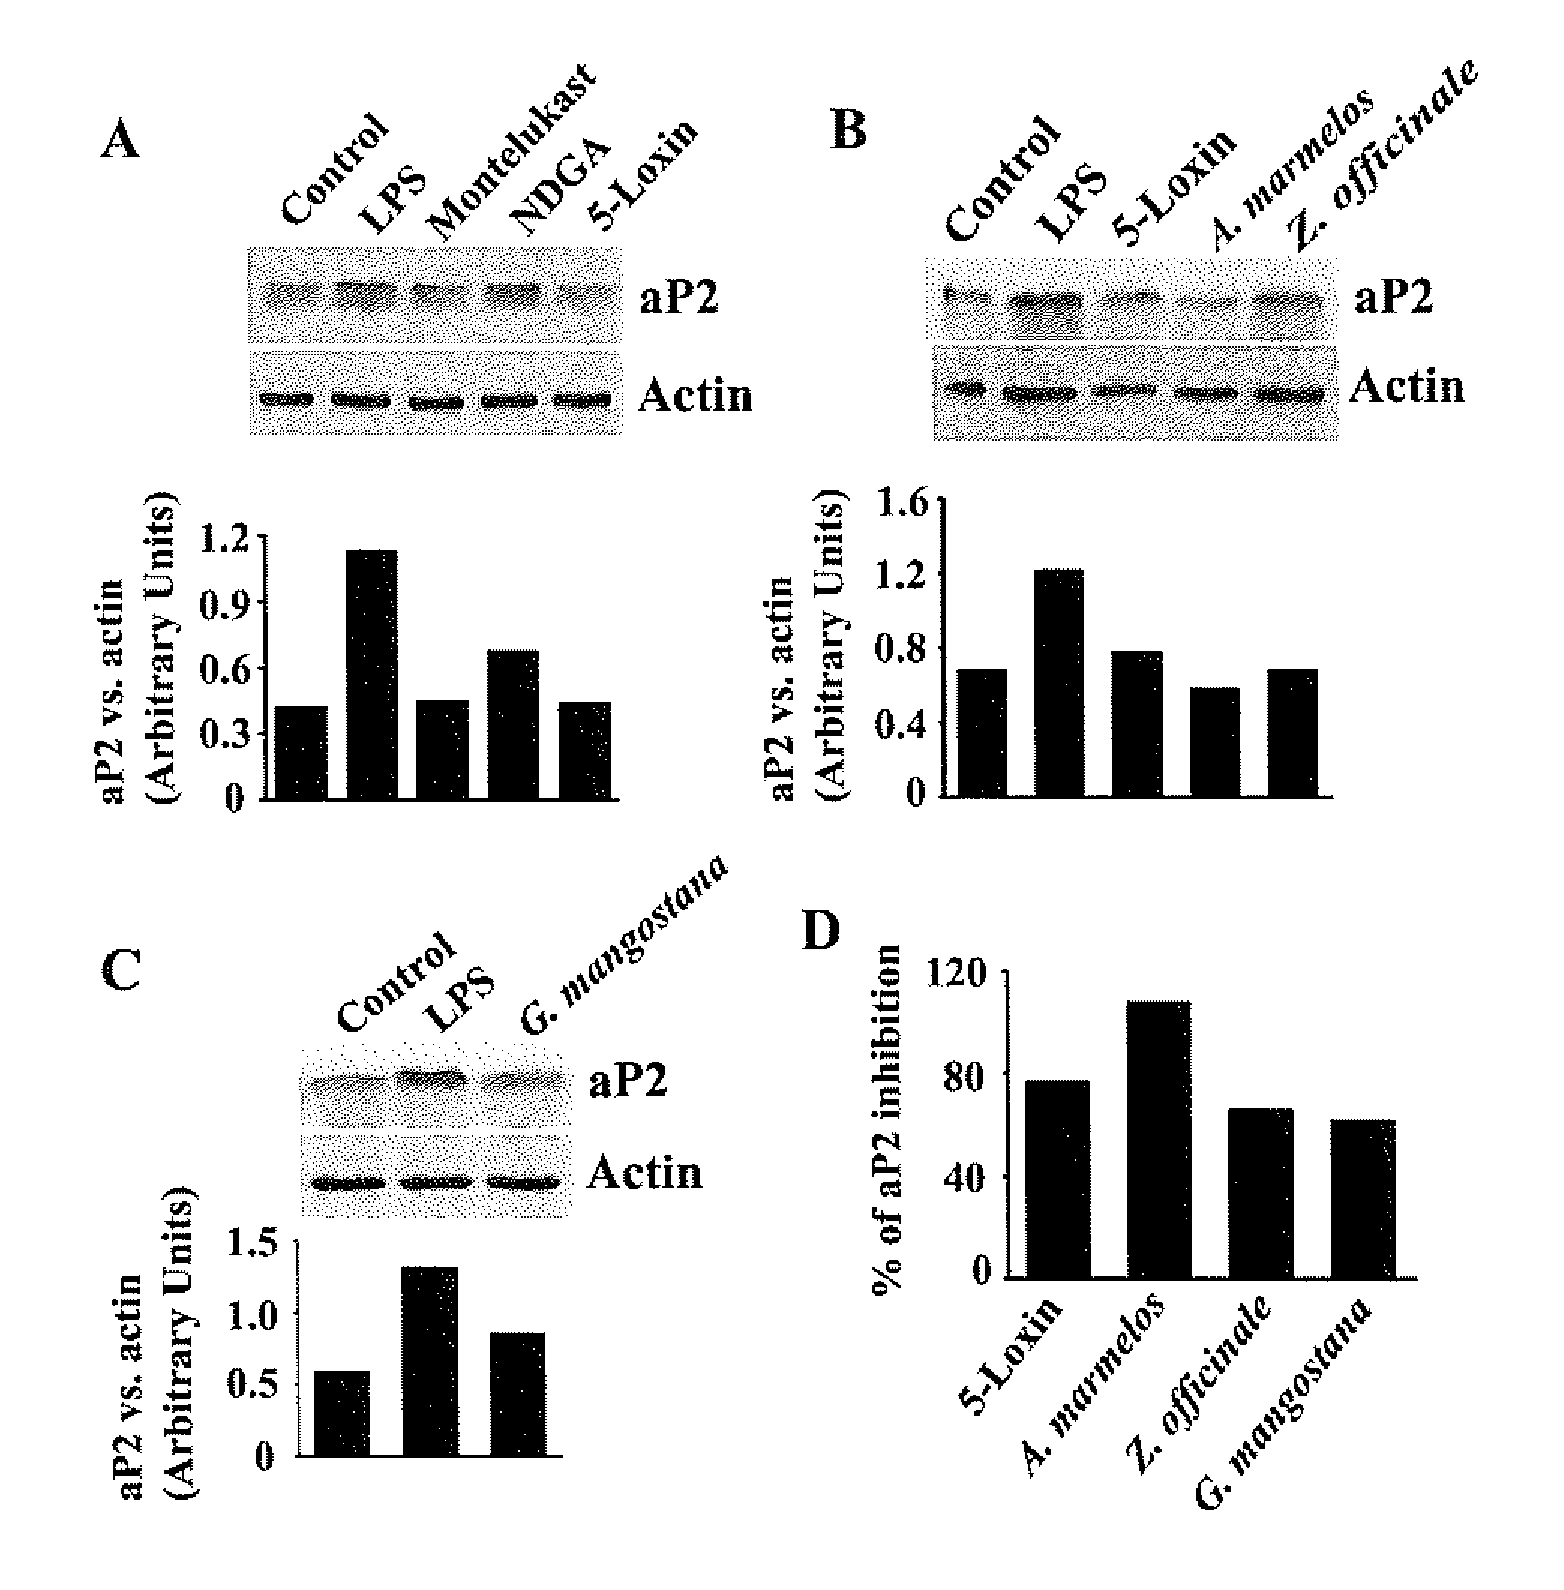 Anti-adipocyte fatty acid-binding protein (AP2), anti-flap and anti-CySLT1 receptor herbal compositions